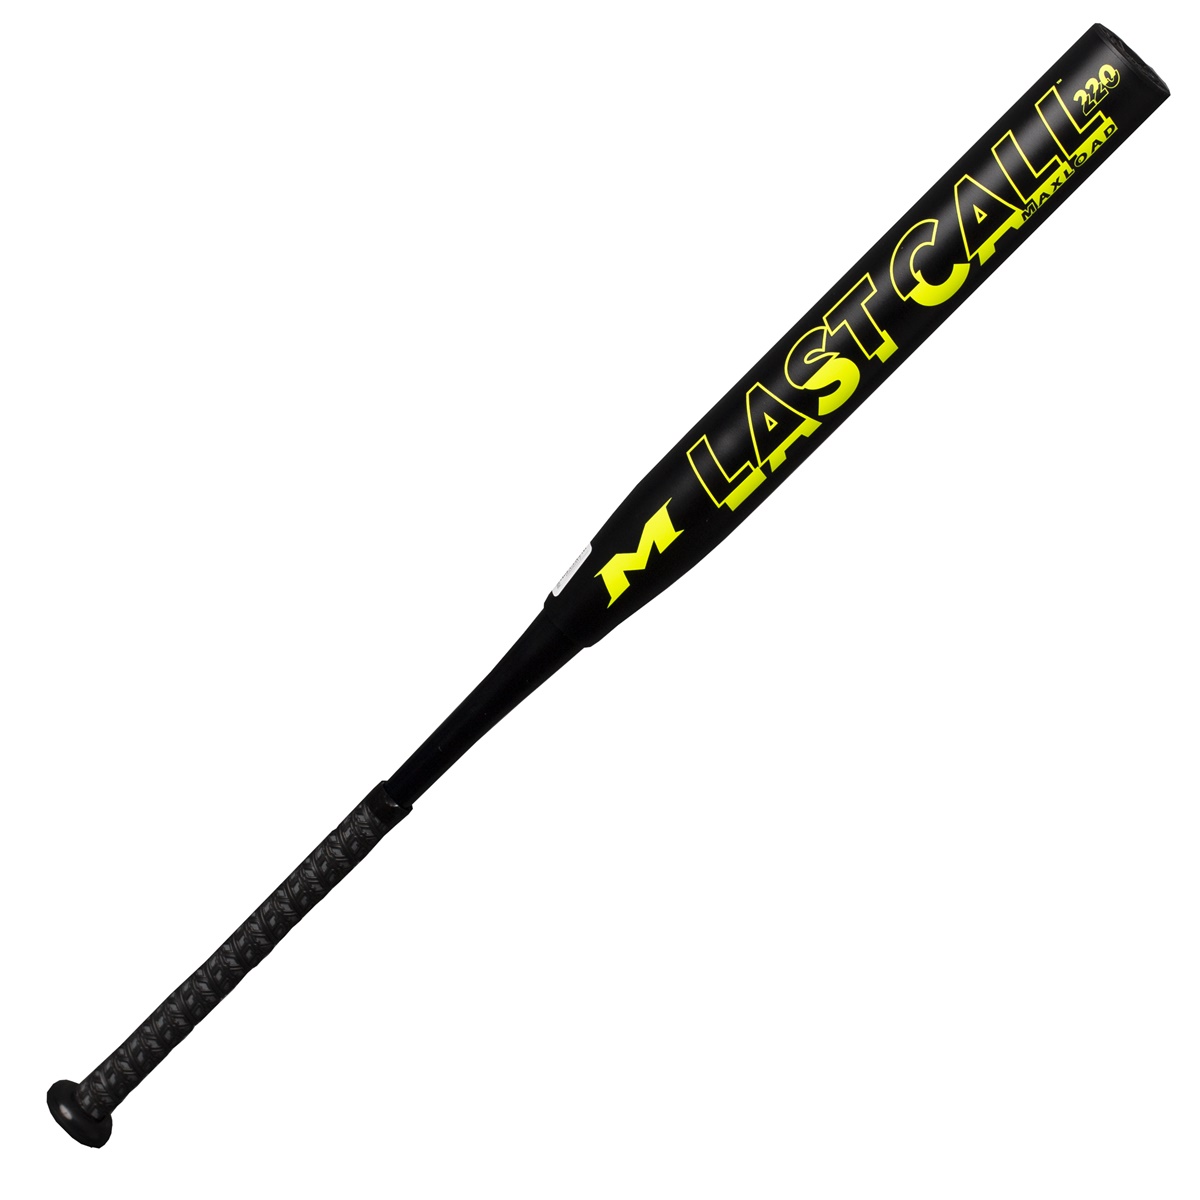 miken-last-call-14-barrel-maxload-usssa-slowpitch-softball-bat-34-inch-27-oz MLC14U-3-27 Miken 658925045516 Dont miss out on the 2021 Last Call Maxload USSSA bat!